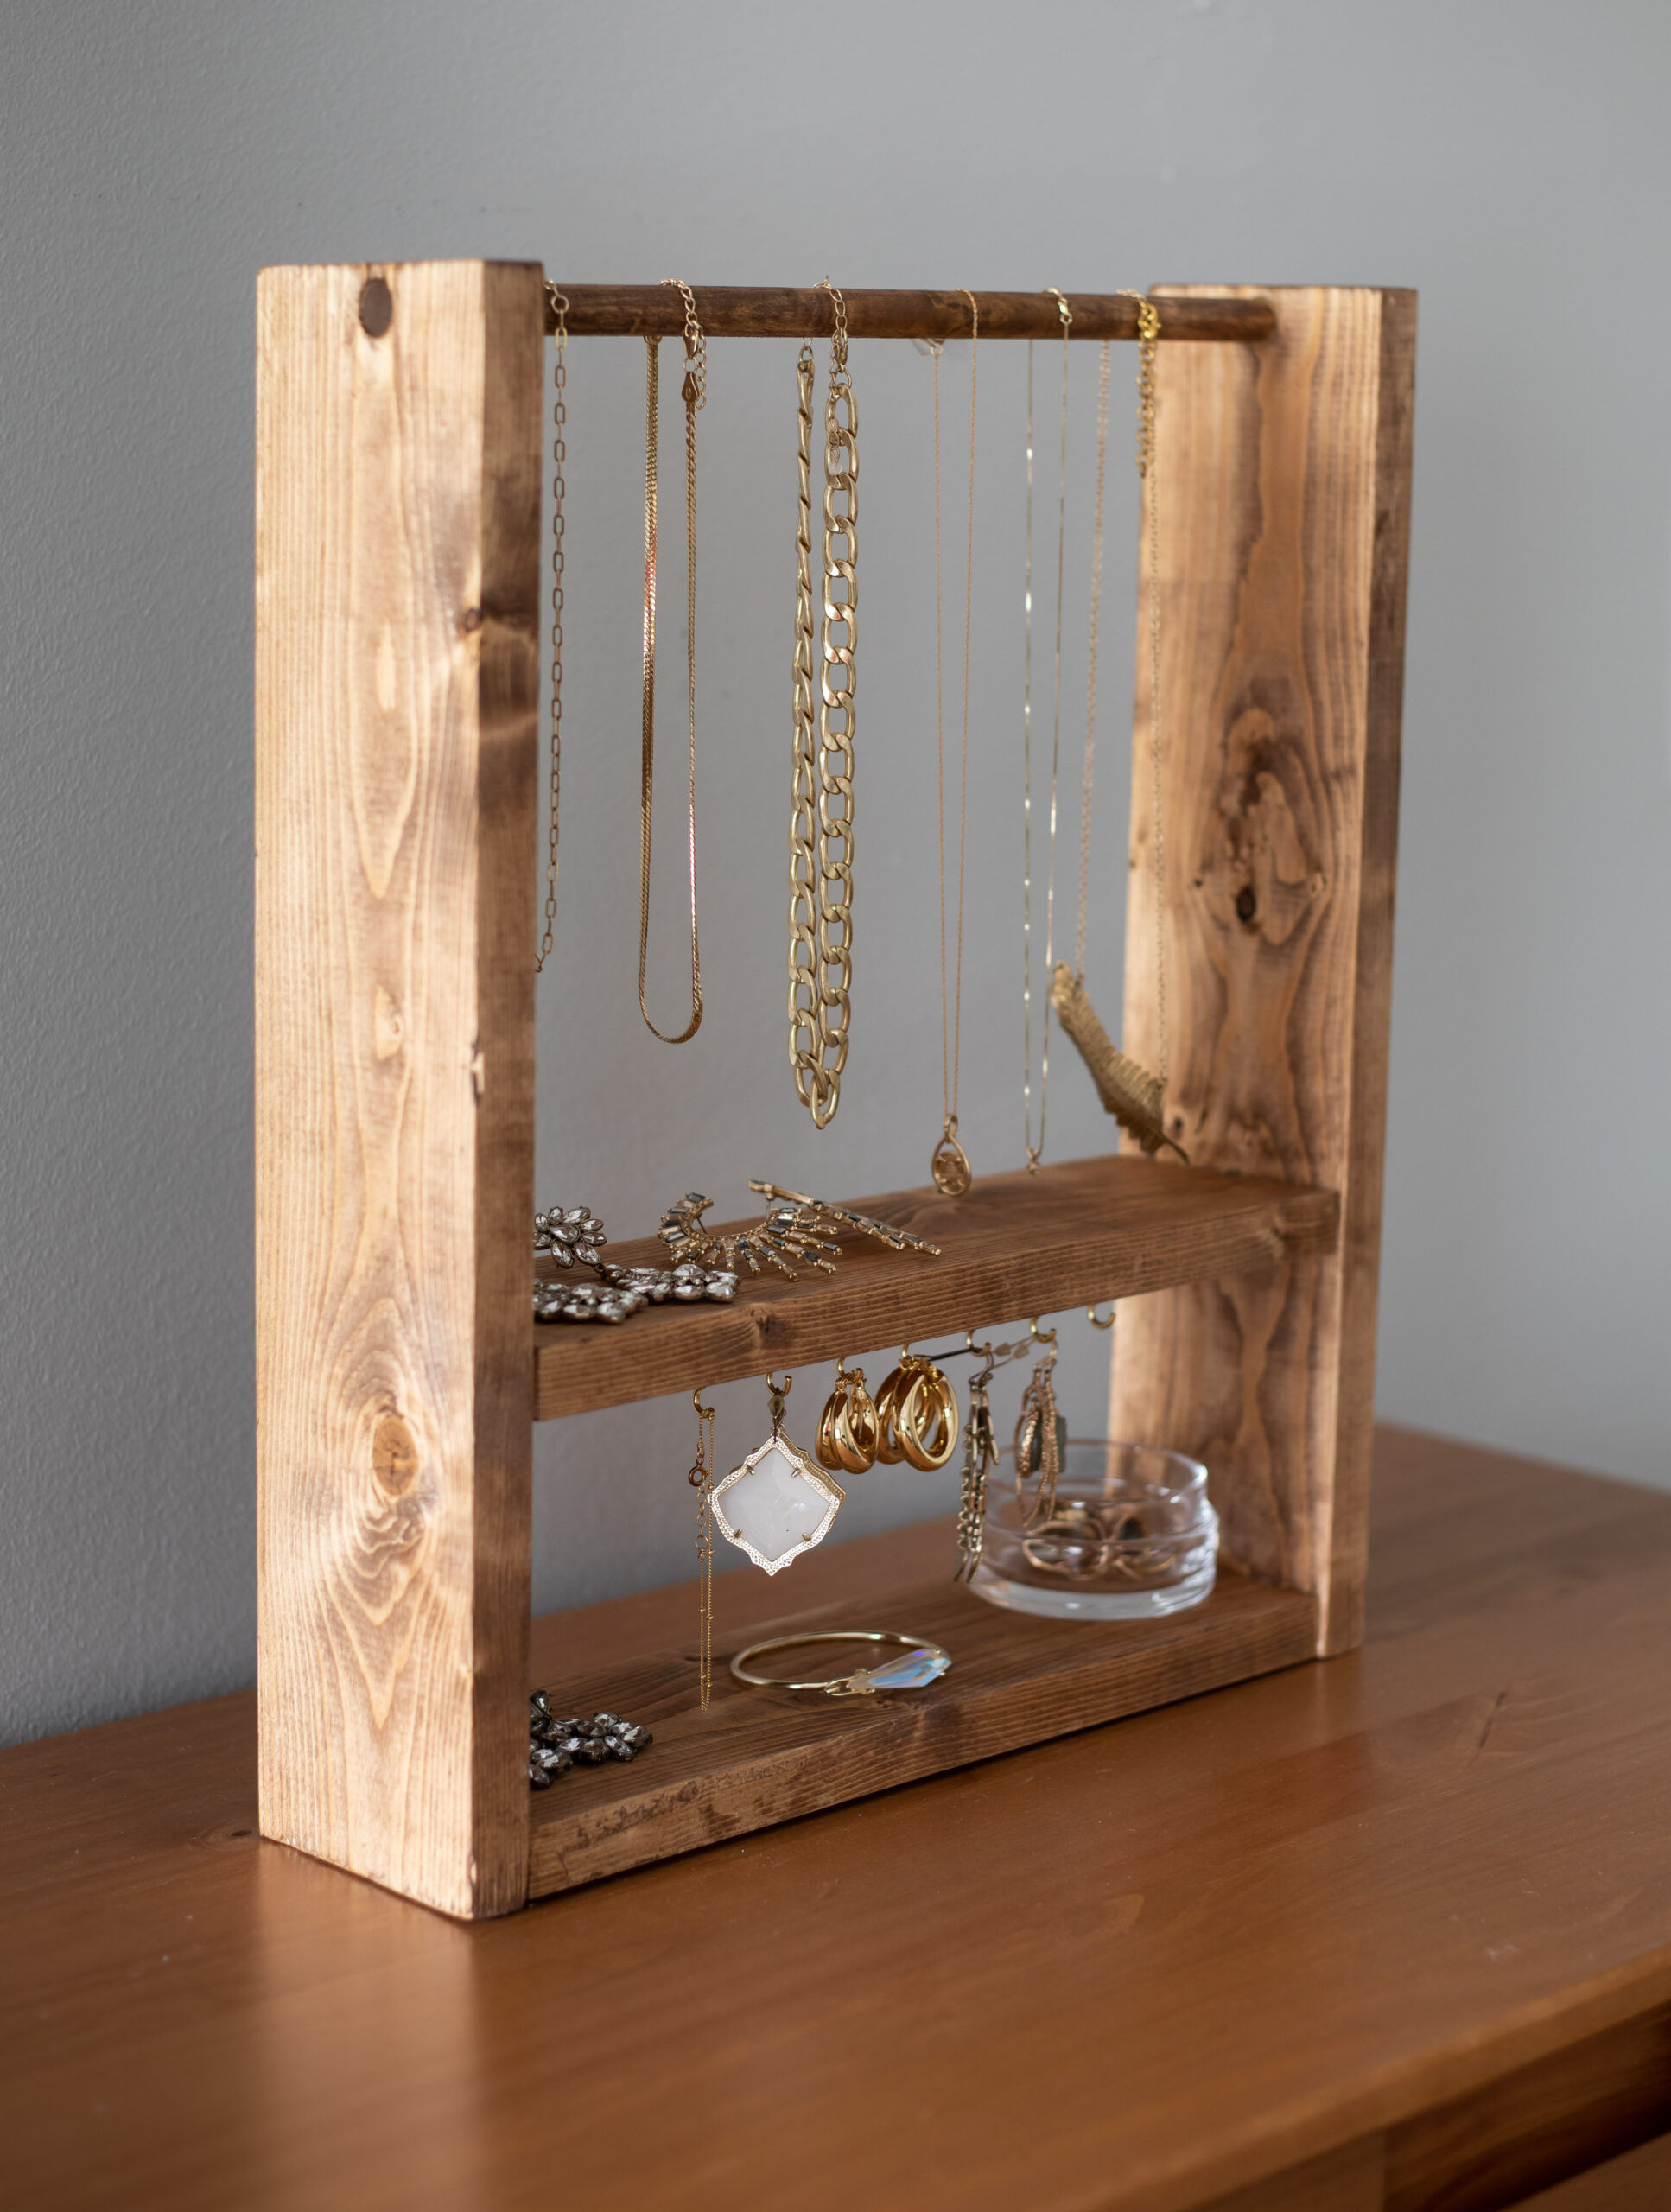 DIY Wooden Jewelry Stand - Erin Spain